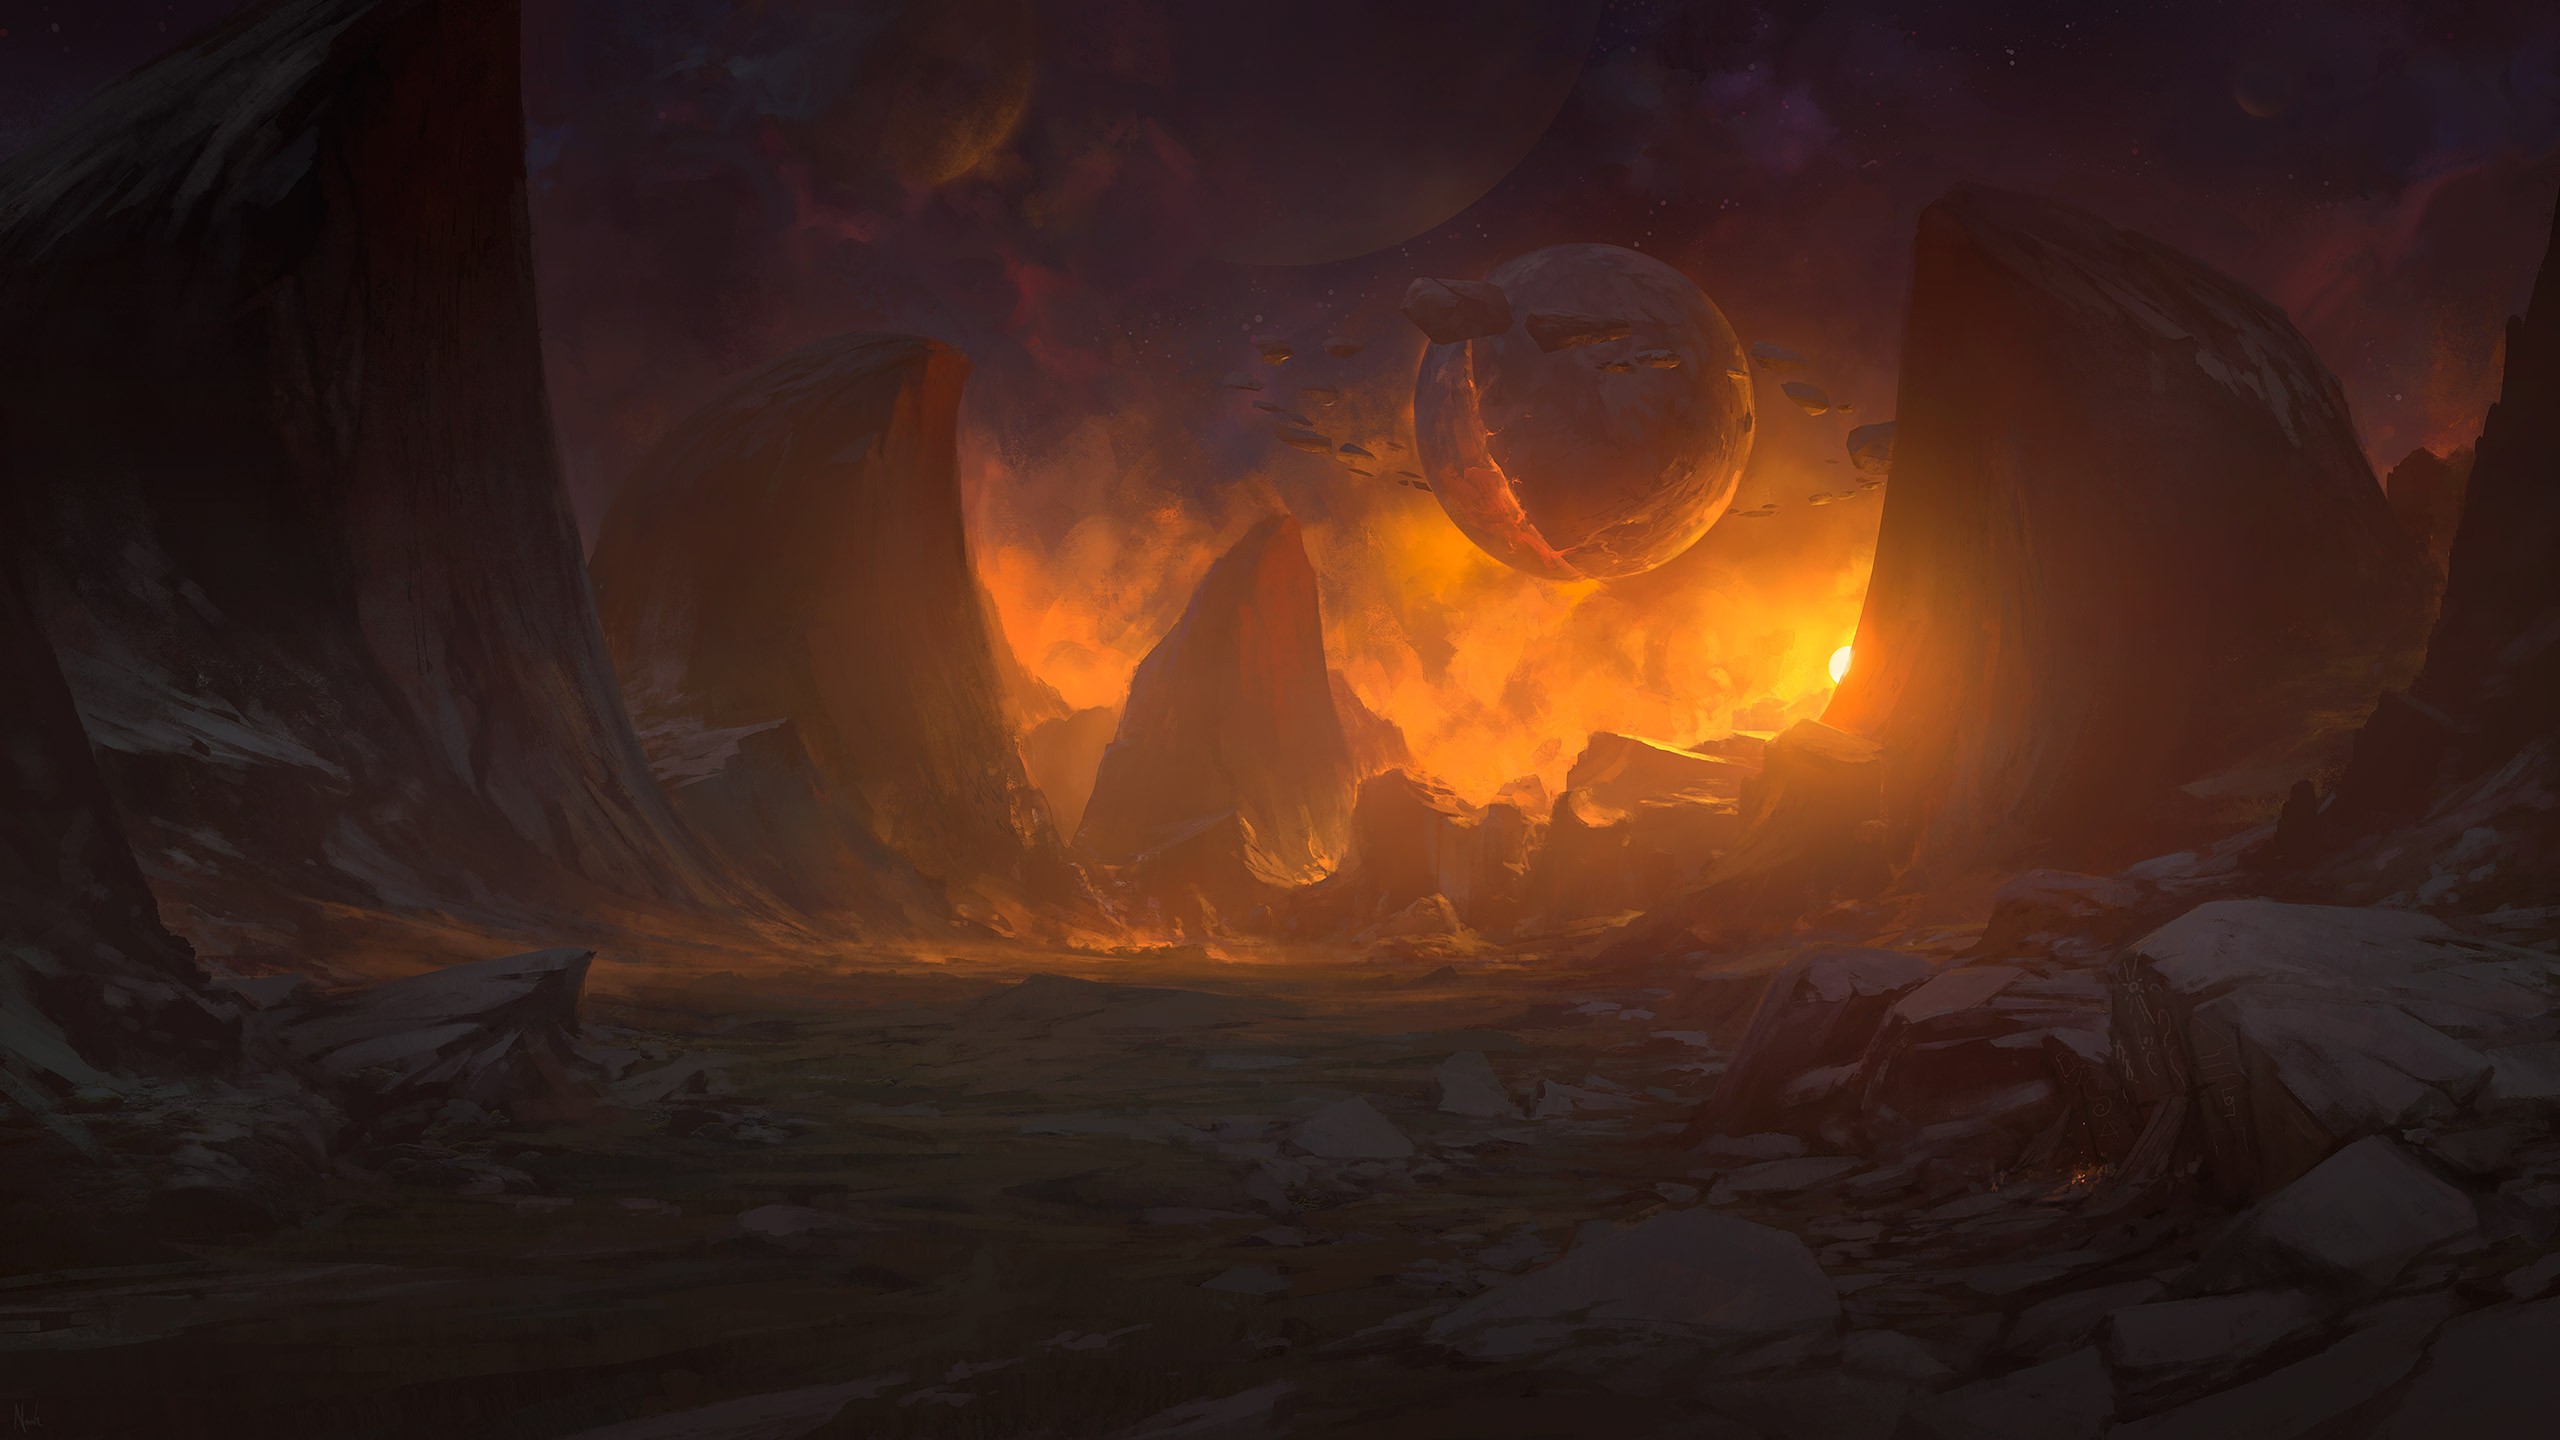 General 2560x1440 artwork fantasy art landscape sunset planet mountains campfire science fiction